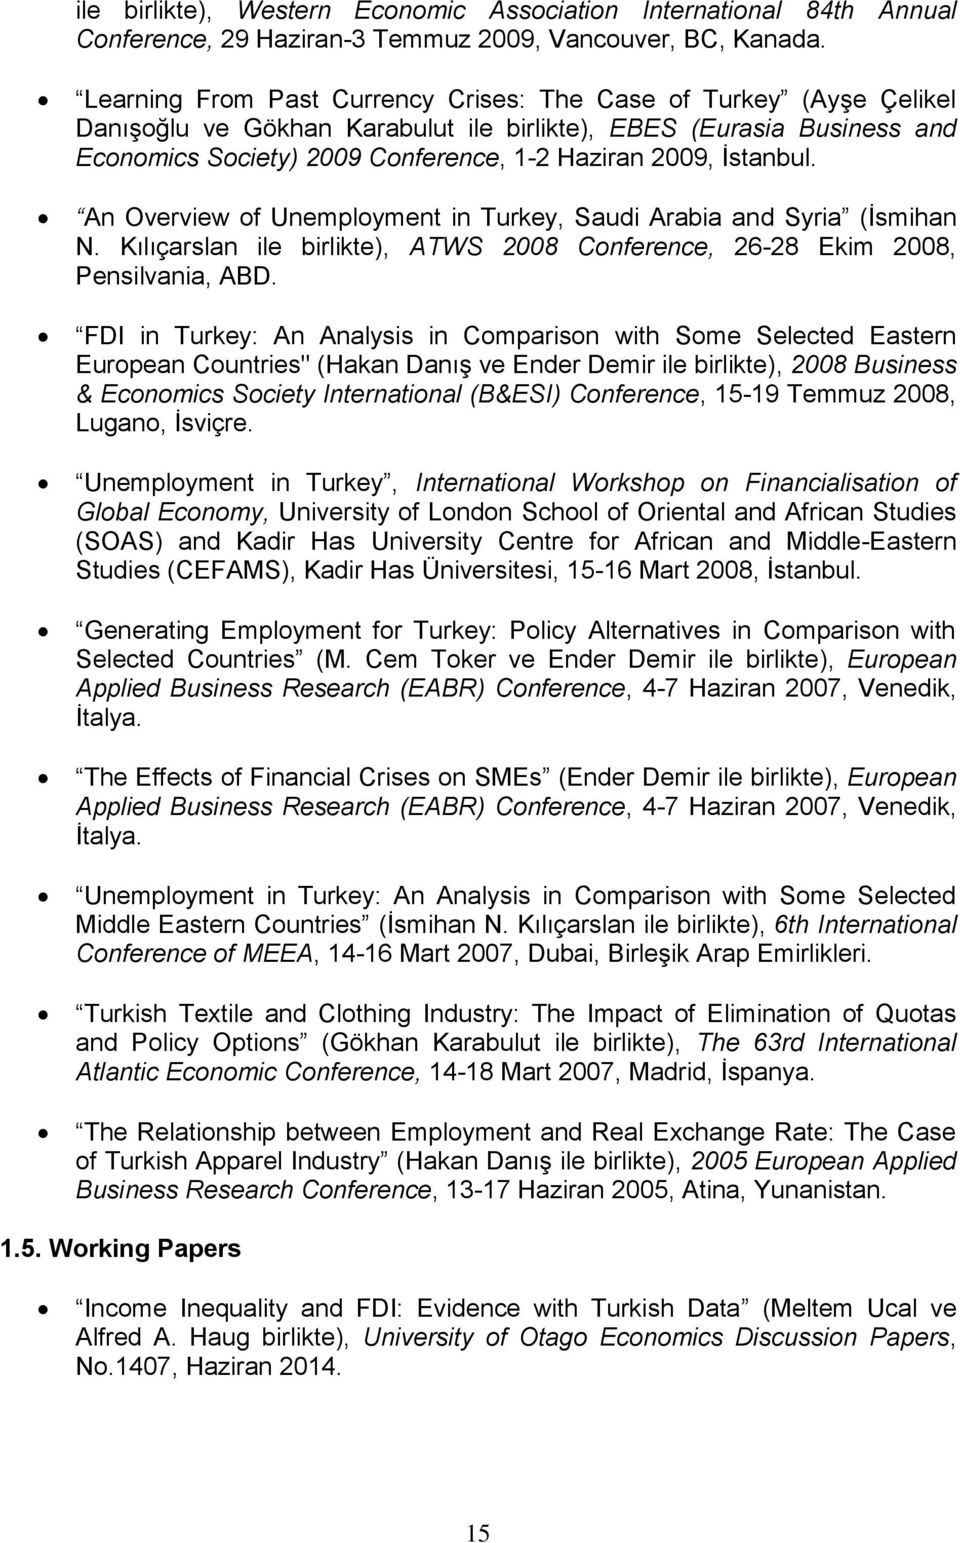 İstanbul. An Overview of Unemployment in Turkey, Saudi Arabia and Syria (İsmihan N. Kılıçarslan ile birlikte), ATWS 2008 Conference, 26-28 Ekim 2008, Pensilvania, ABD.